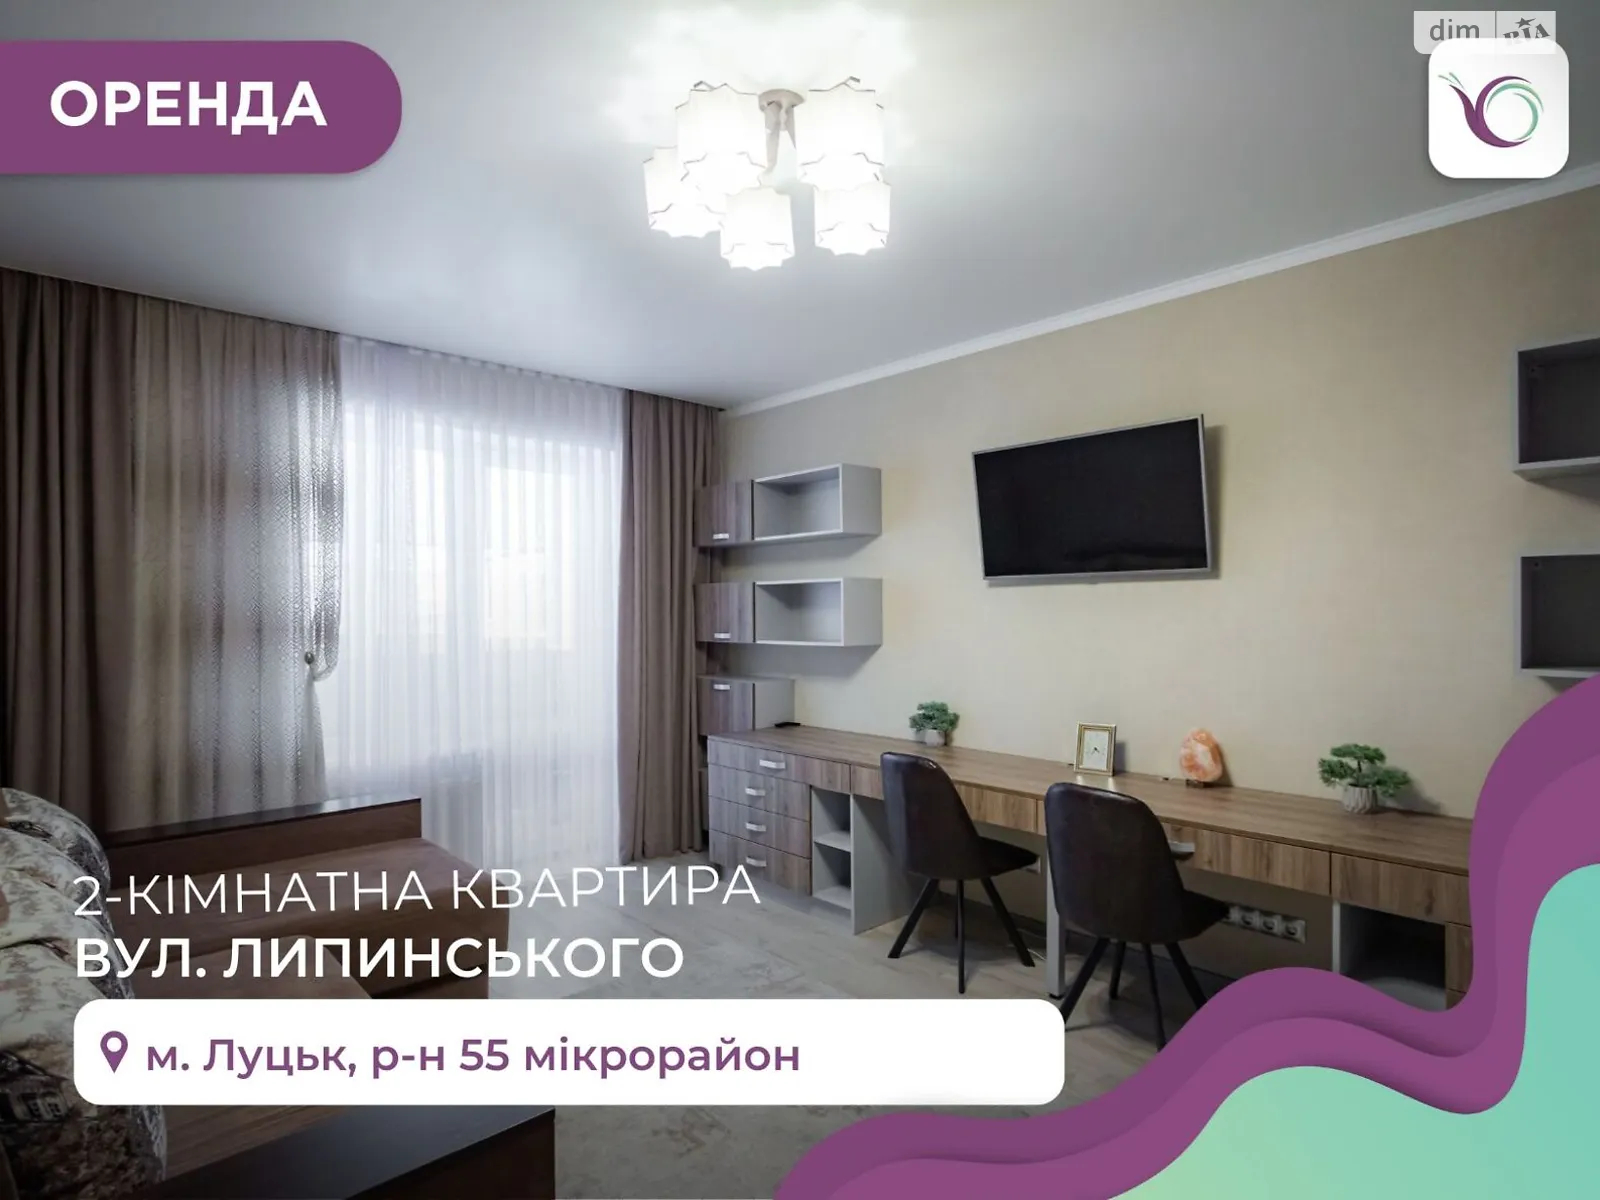 2-кімнатна квартира 66.3 кв. м у Луцьку, цена: 600 $